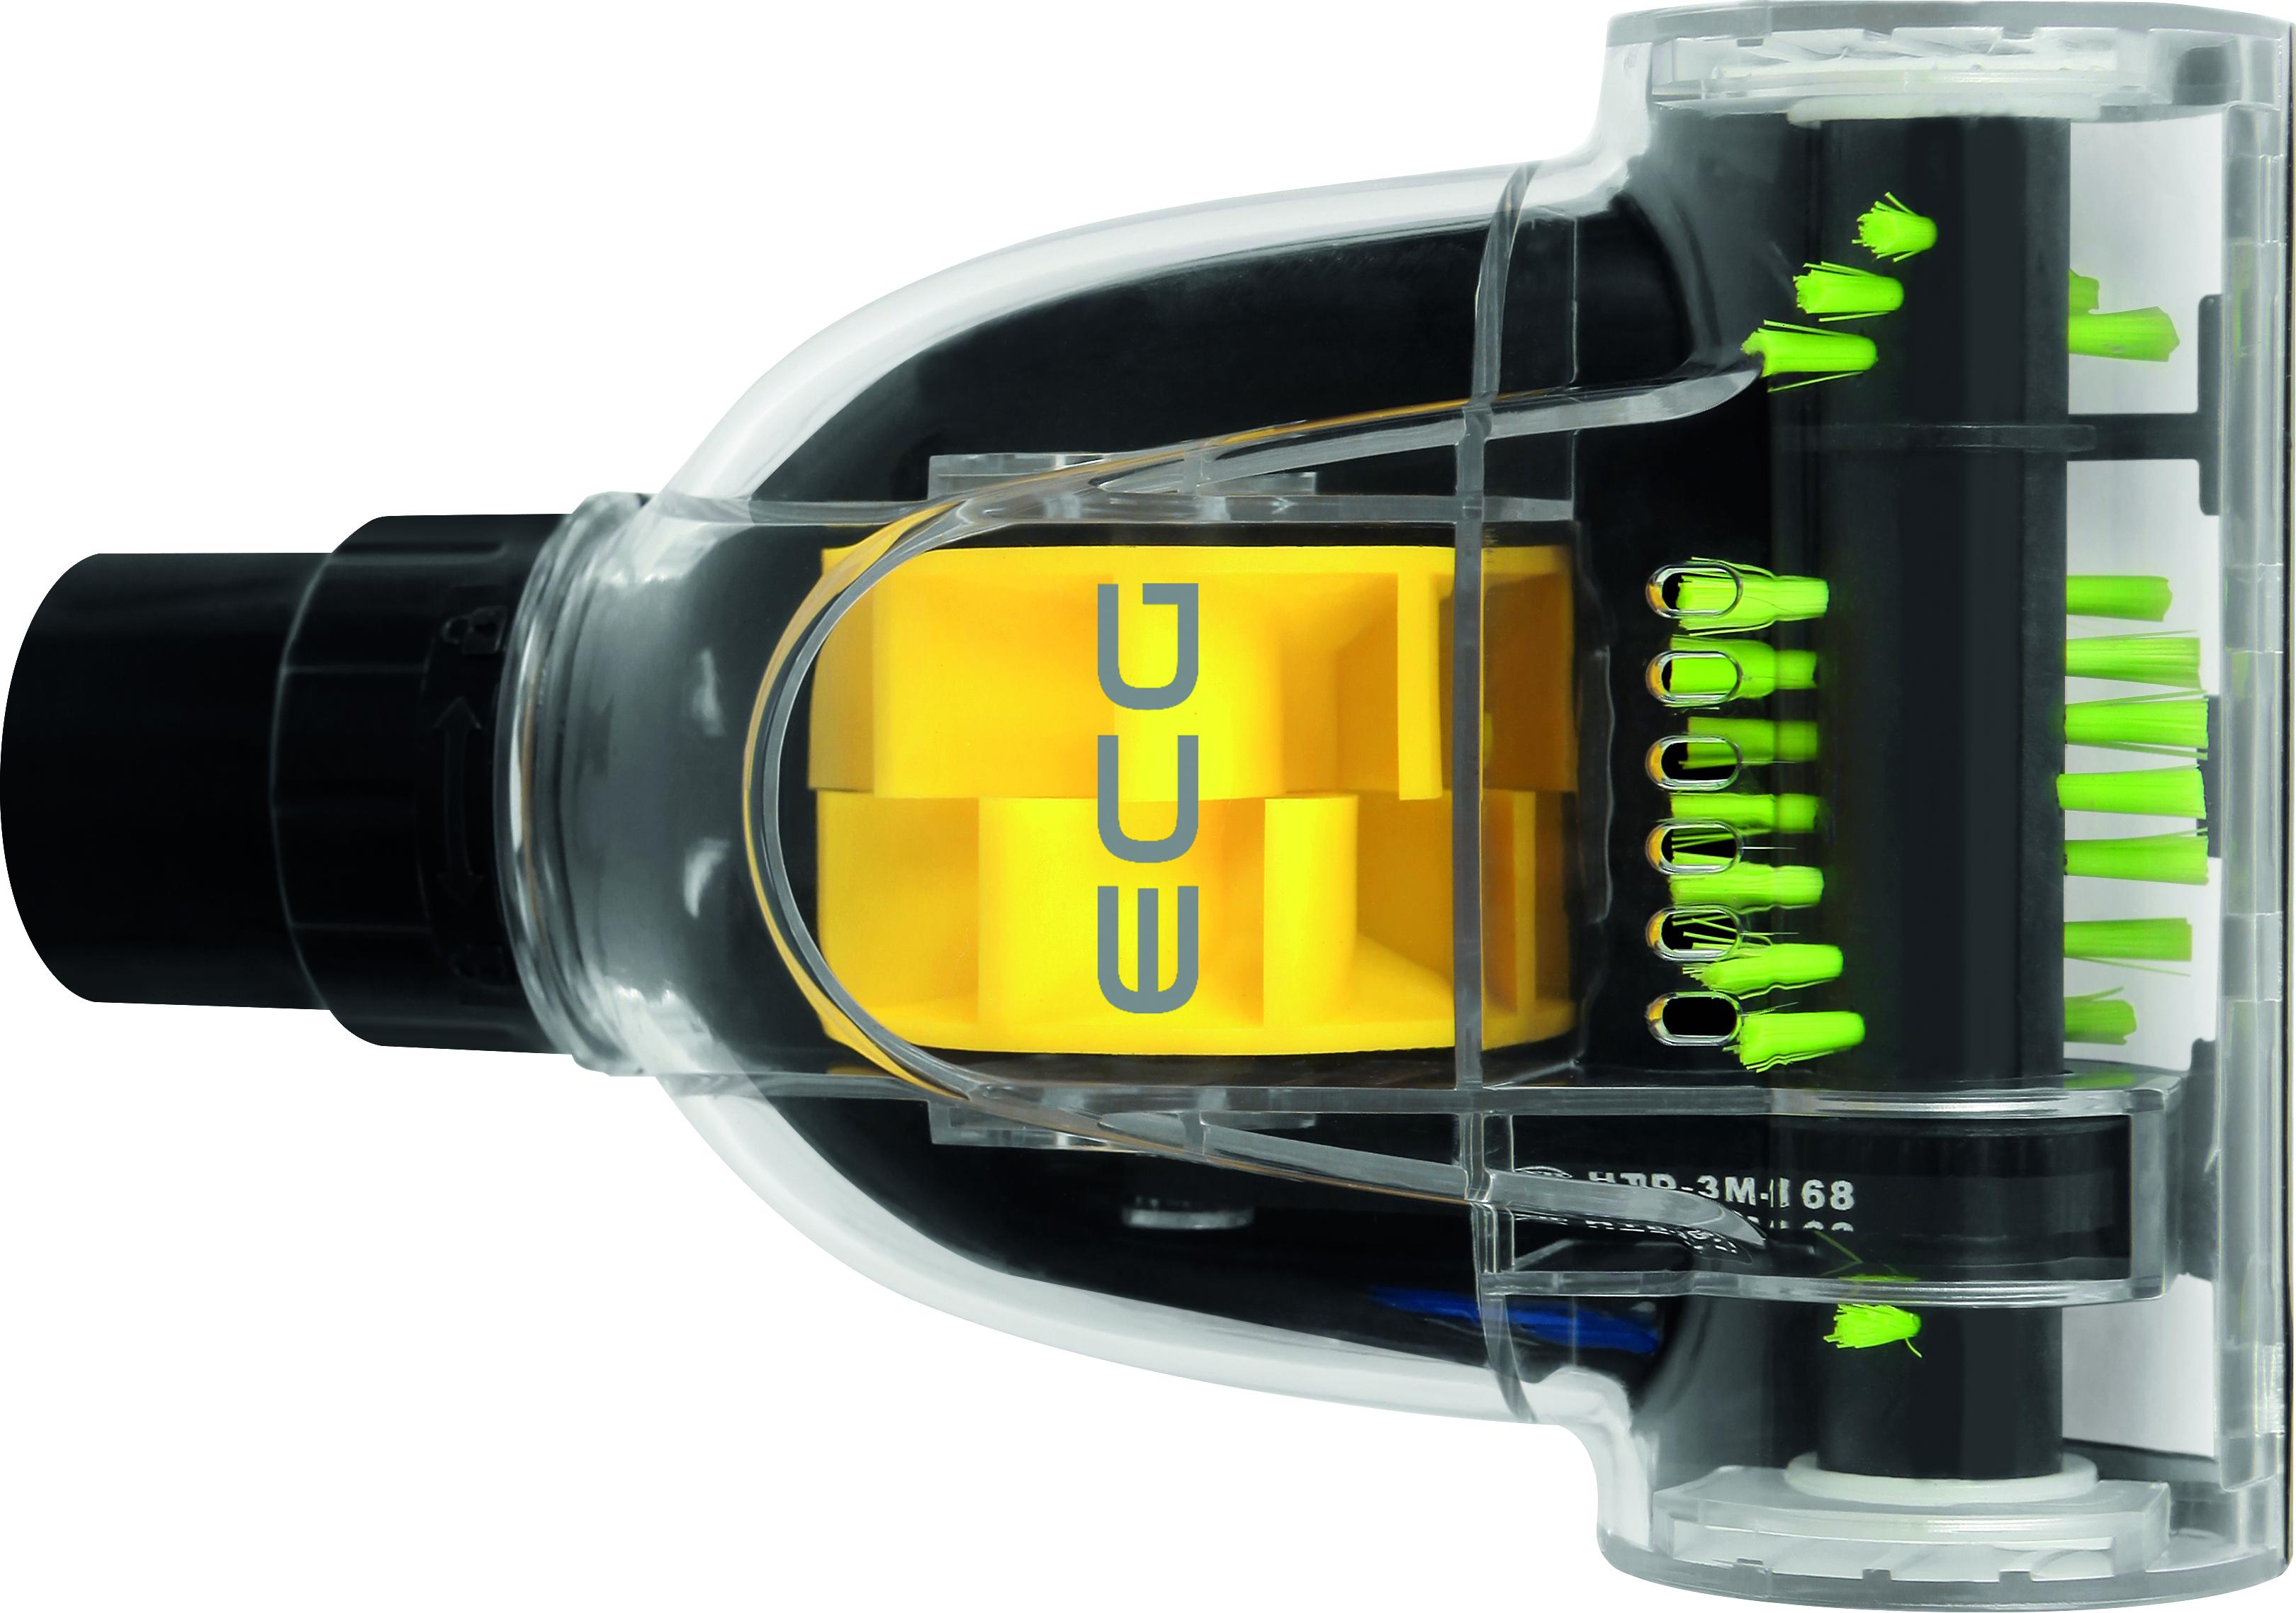 ECG VP S3010 | Staubsauger maximale maximale Floor | | Leistung: 700 Watt, Leistung: W 700 vacuum HEPA-Filter White) cleaners, 